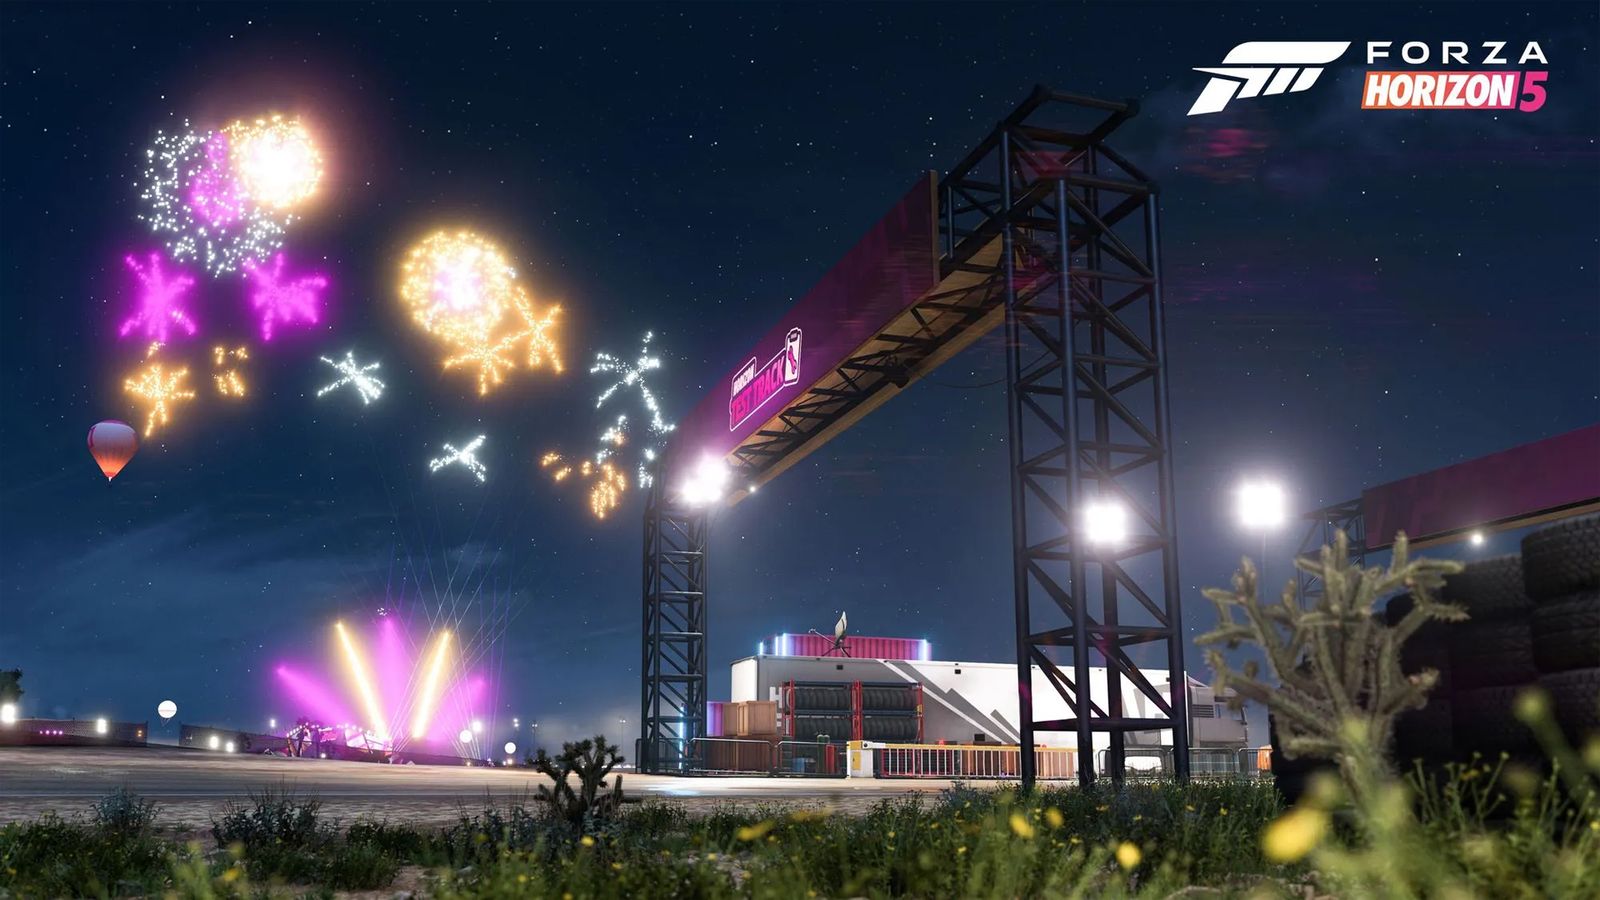 Forza Horizon 5 Upgrade Heroes test track